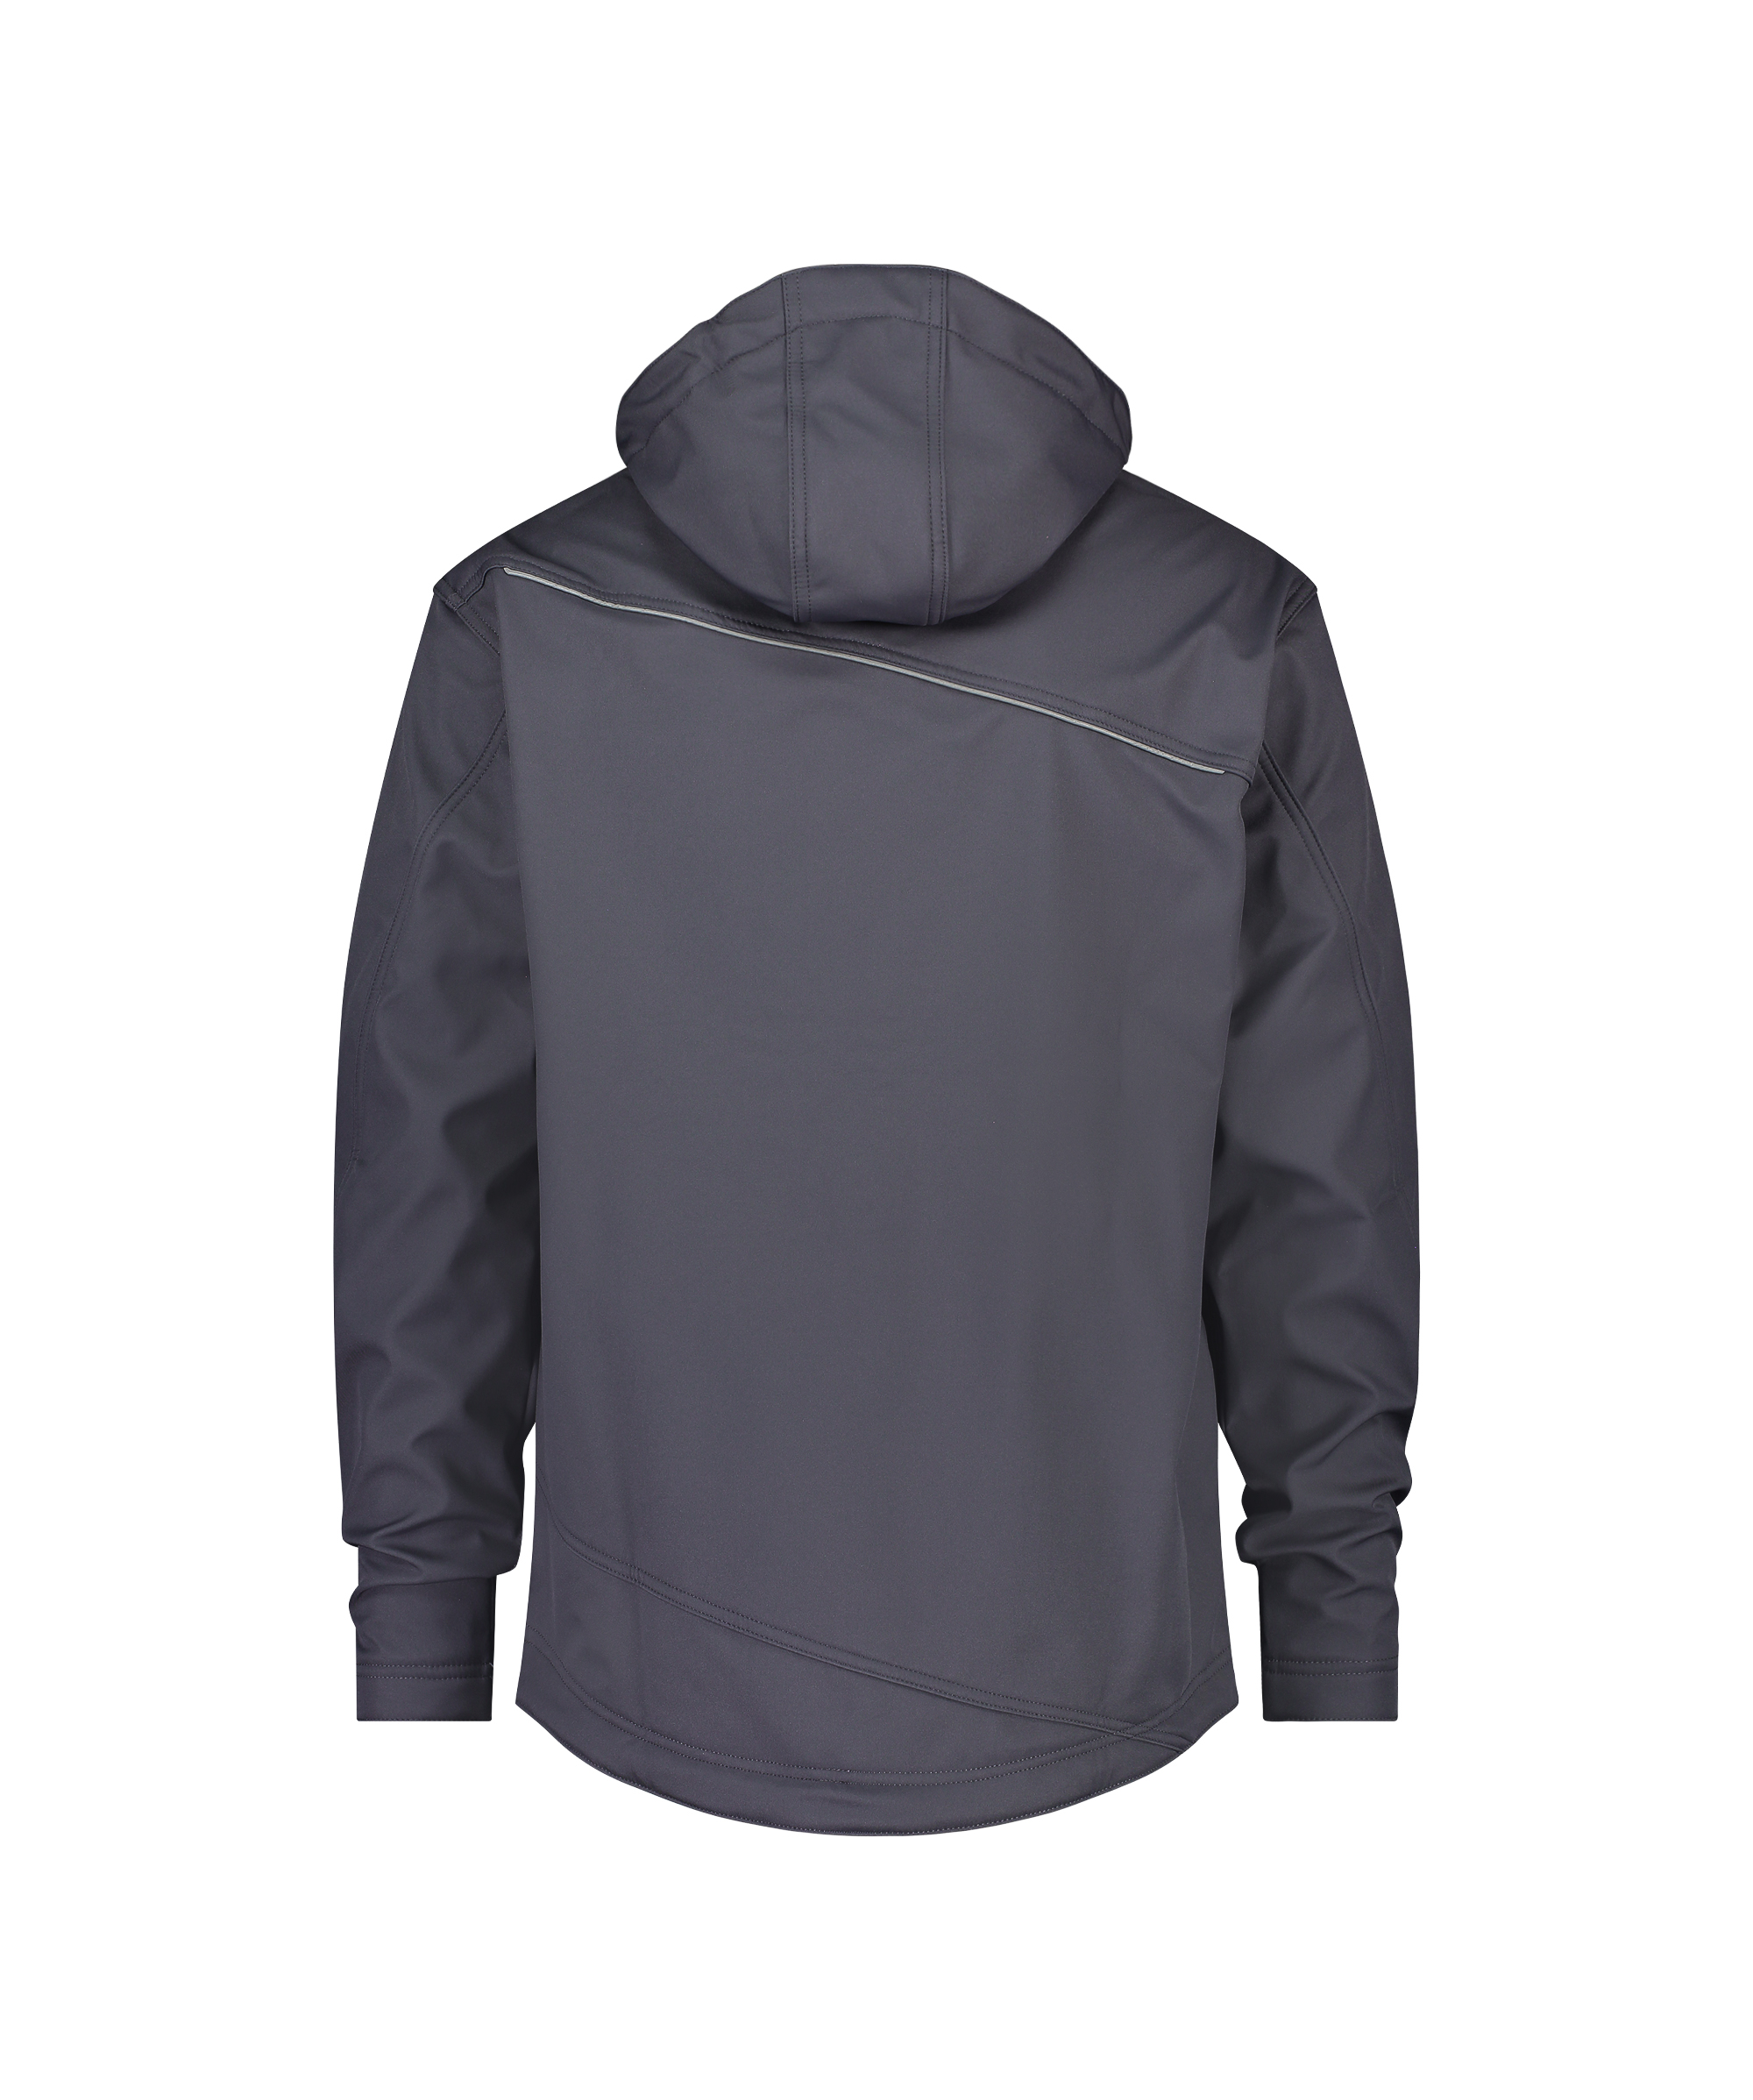 Dassy ® trabajo chaqueta Softshell-chaqueta Tavira 300304 gris talla s nuevo 